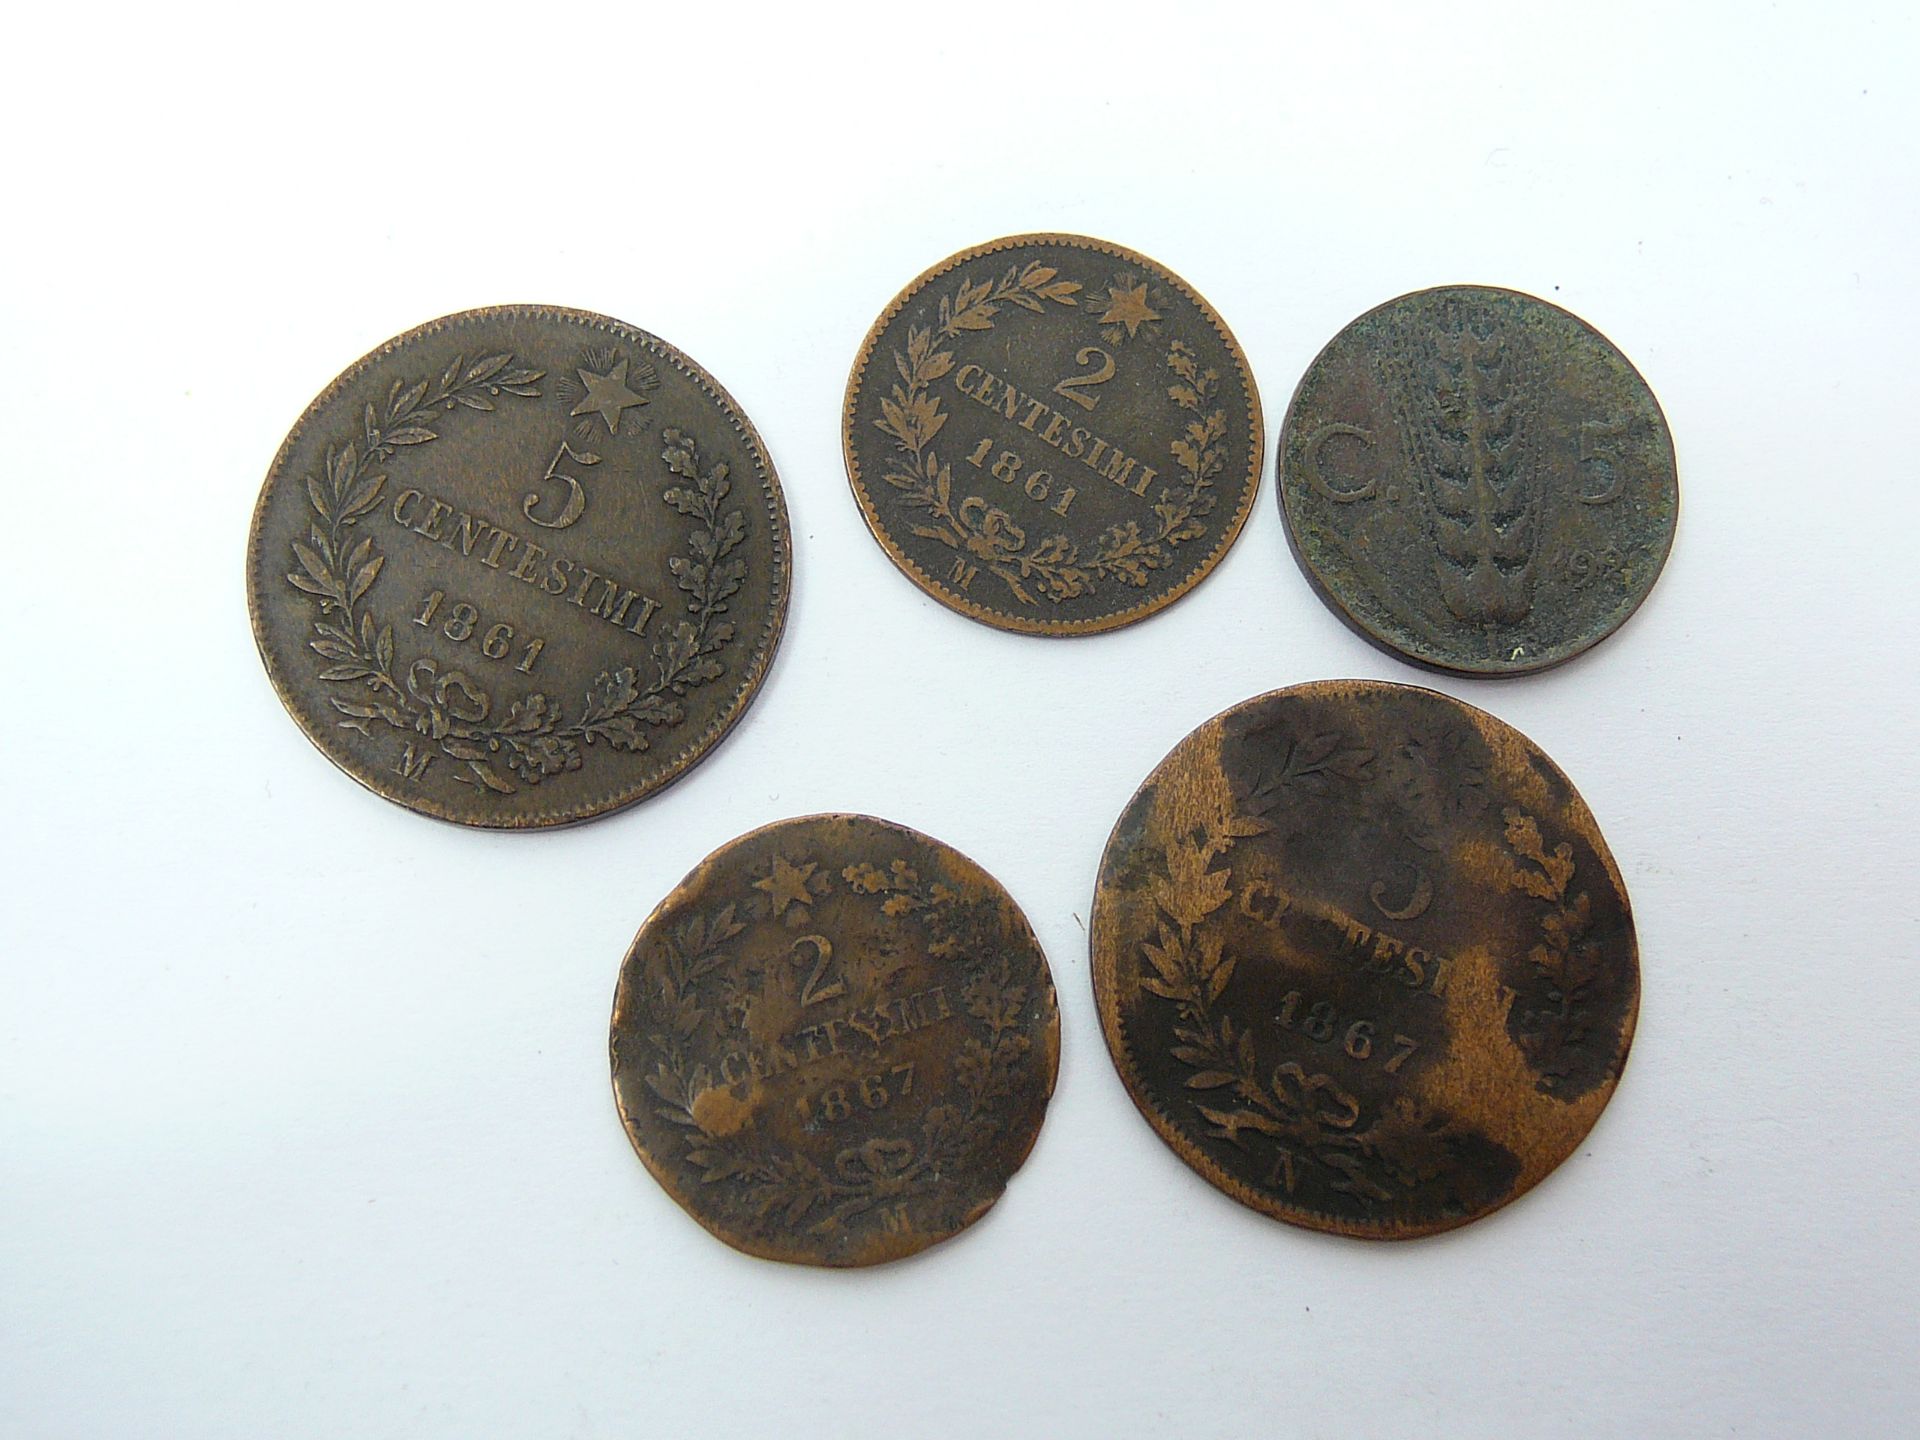 Assd Italian Vittorio Emanuele coinage - Image 2 of 2